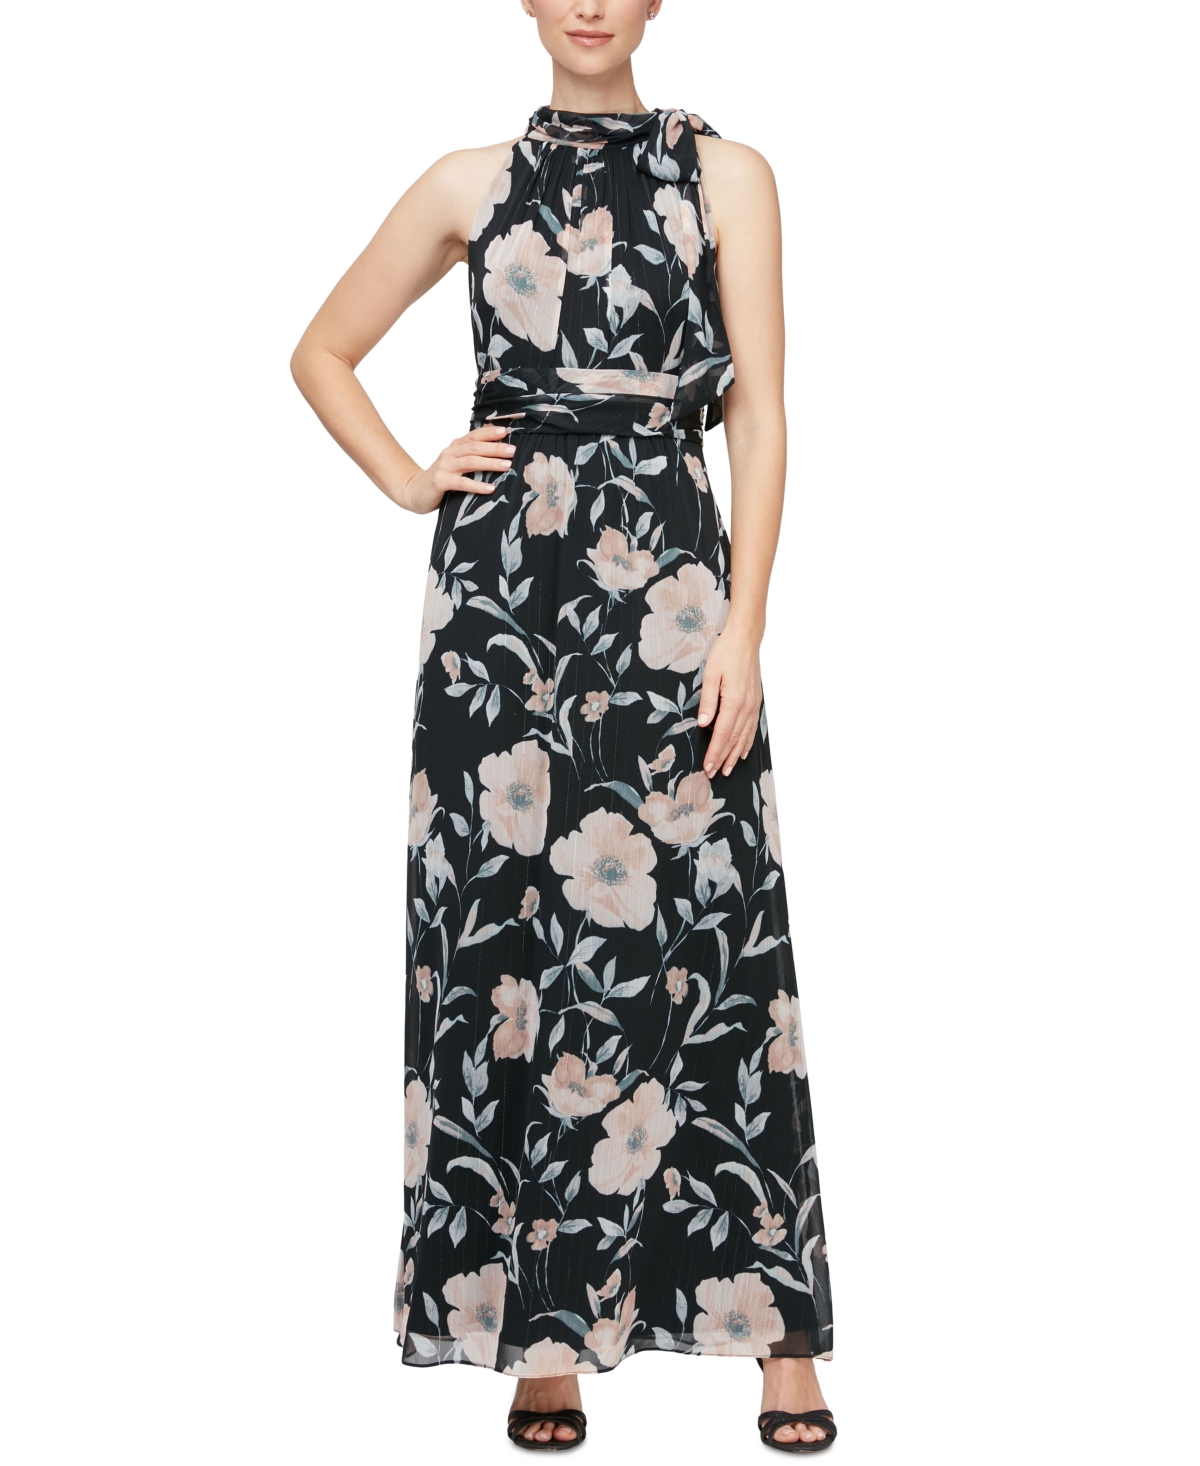 Petite Floral-Print Halter Dress - Black Multi